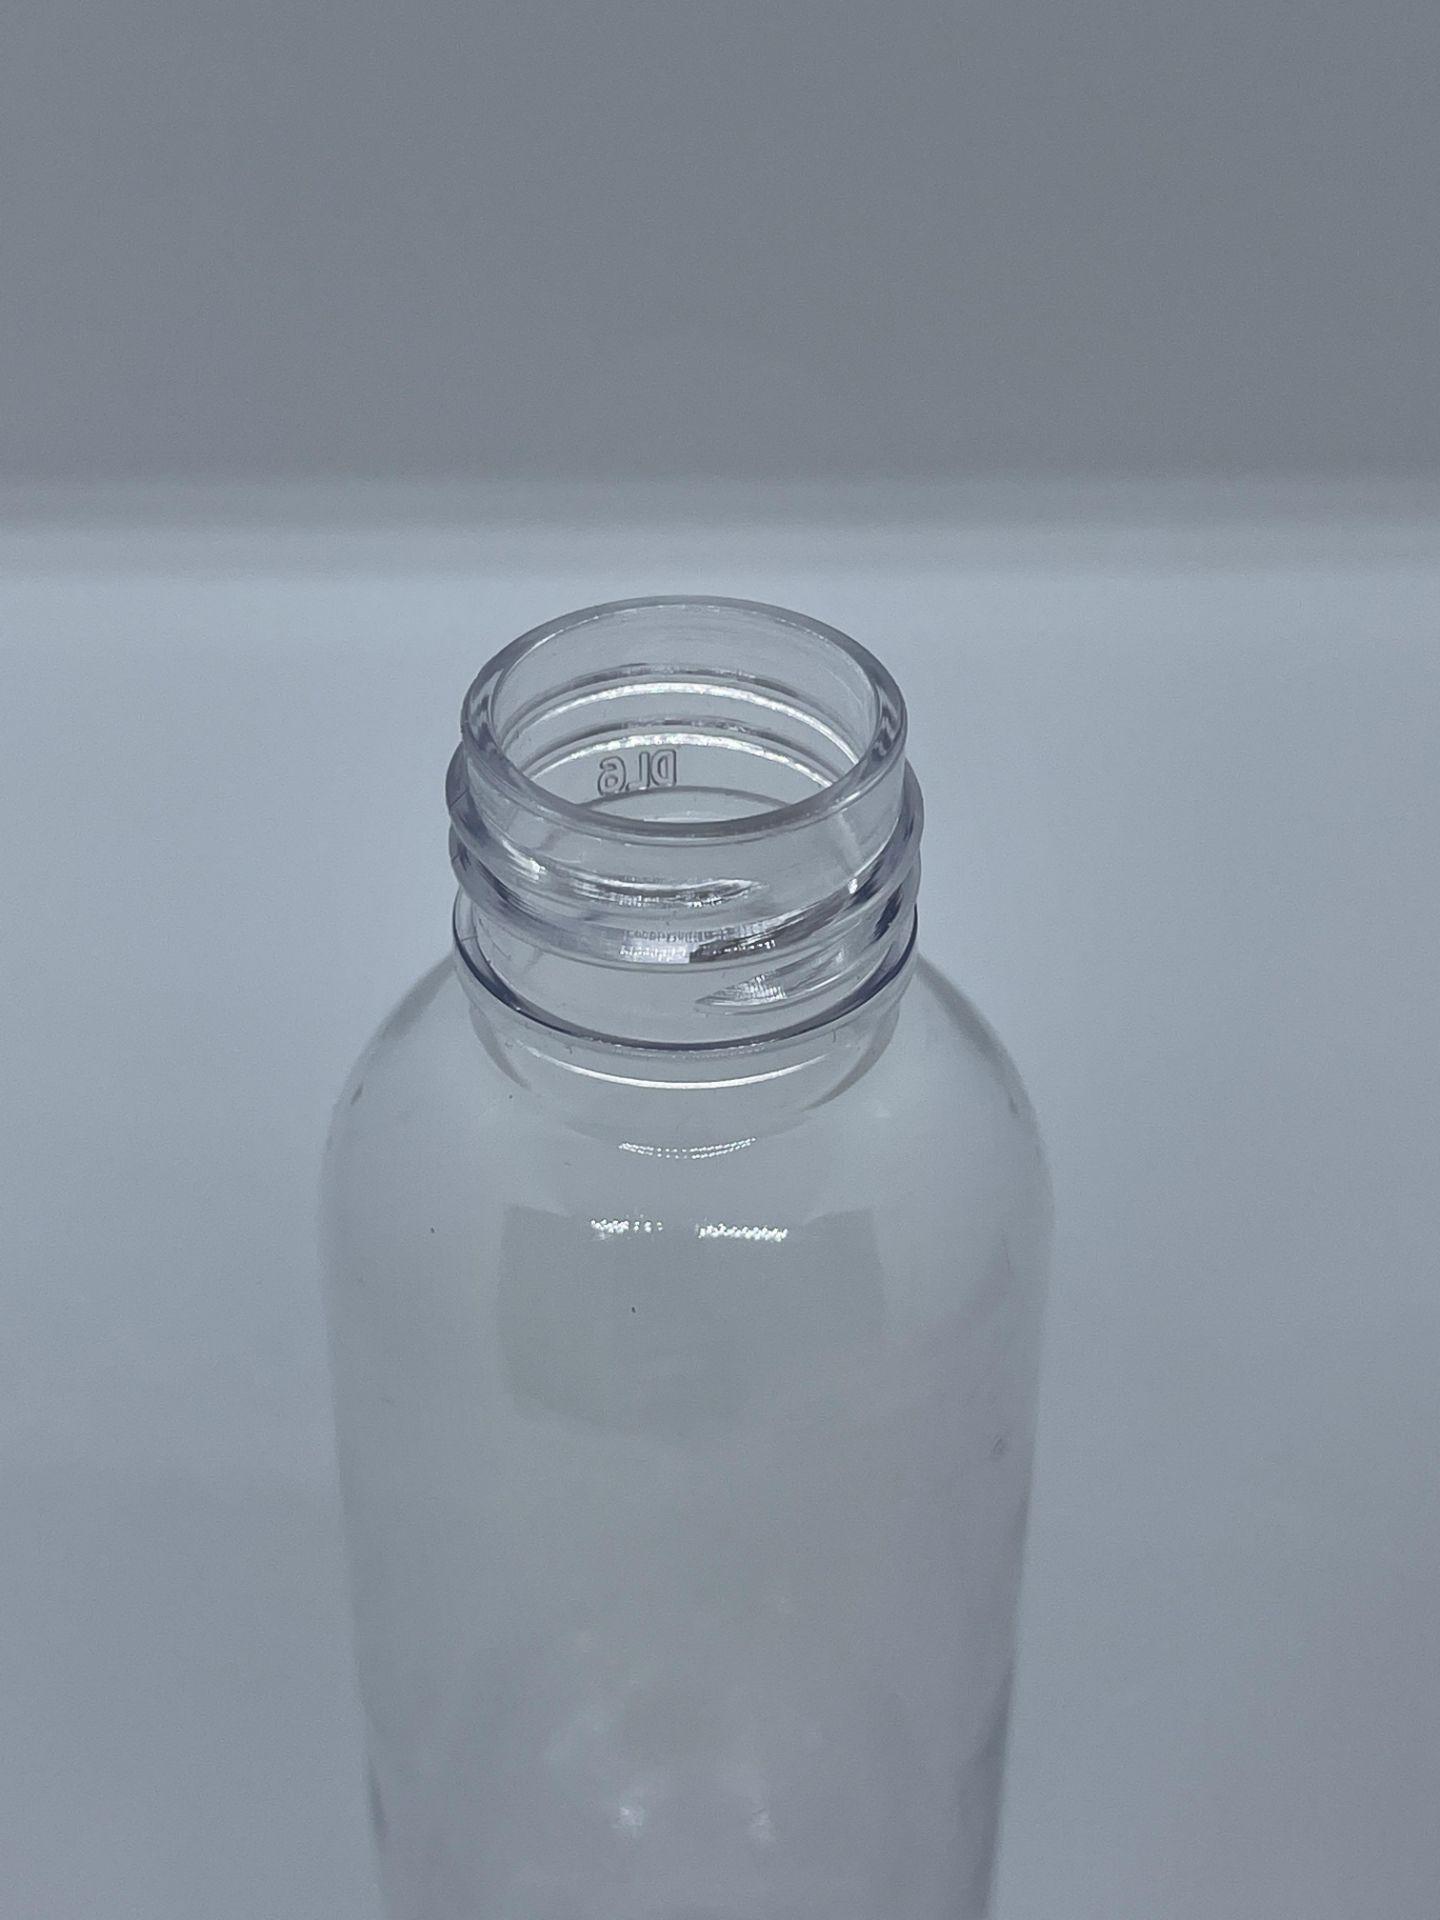 96,000 - Clear Plastic Bullet 4 oz Empty Bottles, 24-410 Threading Neck, 5" Tall, 1 5/8" Diameter - Image 3 of 4